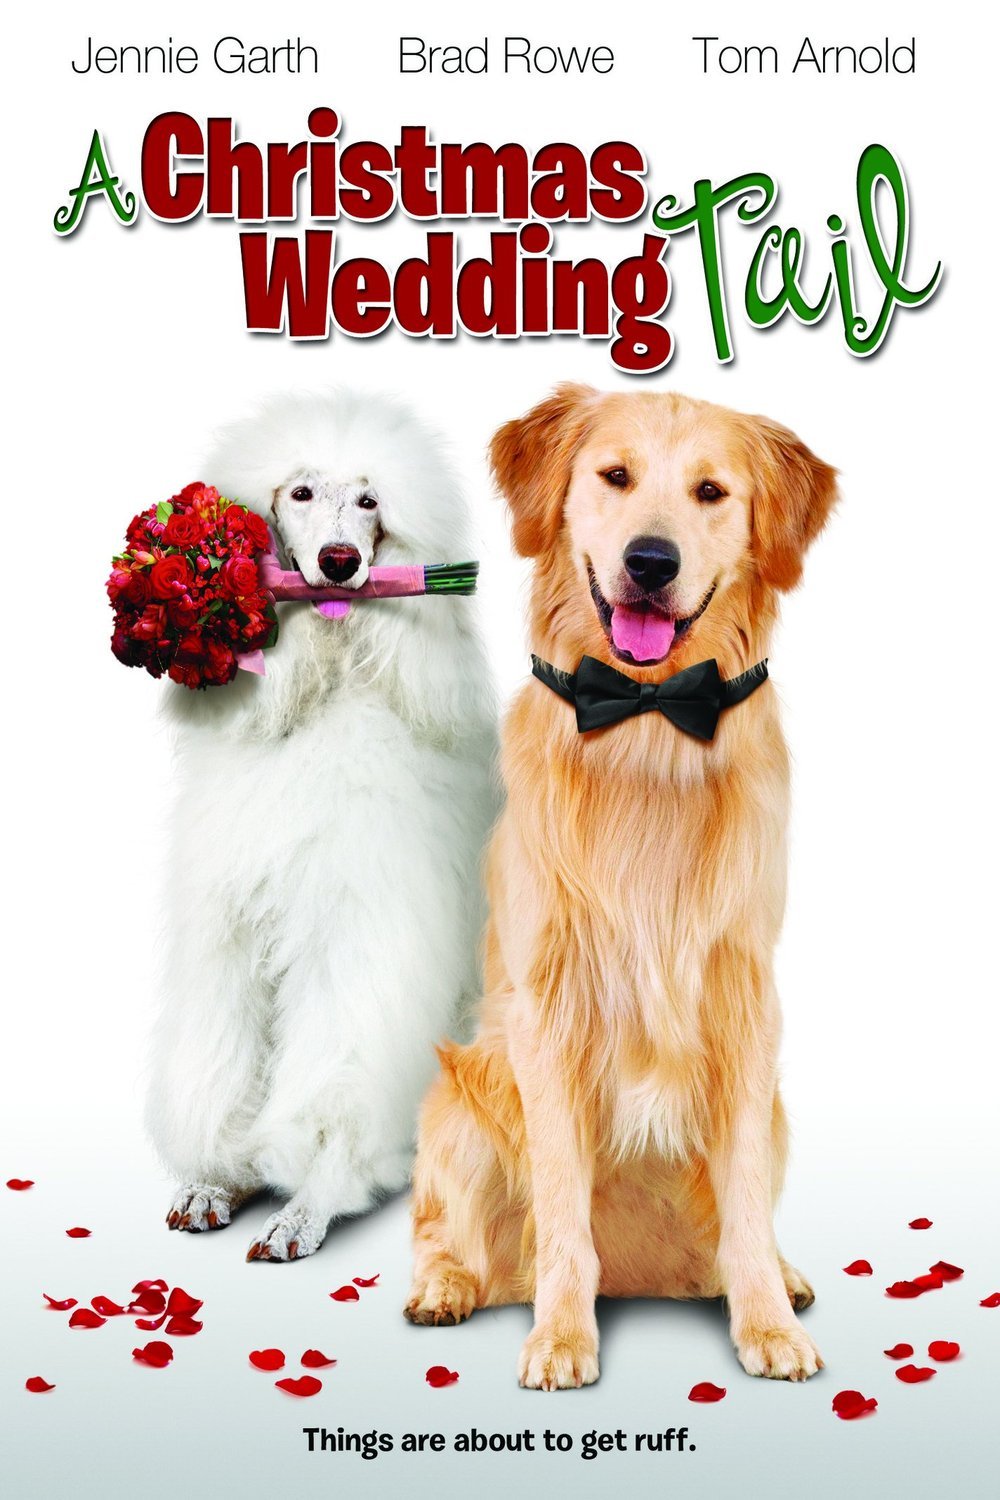 L'affiche du film A Christmas Wedding Tail